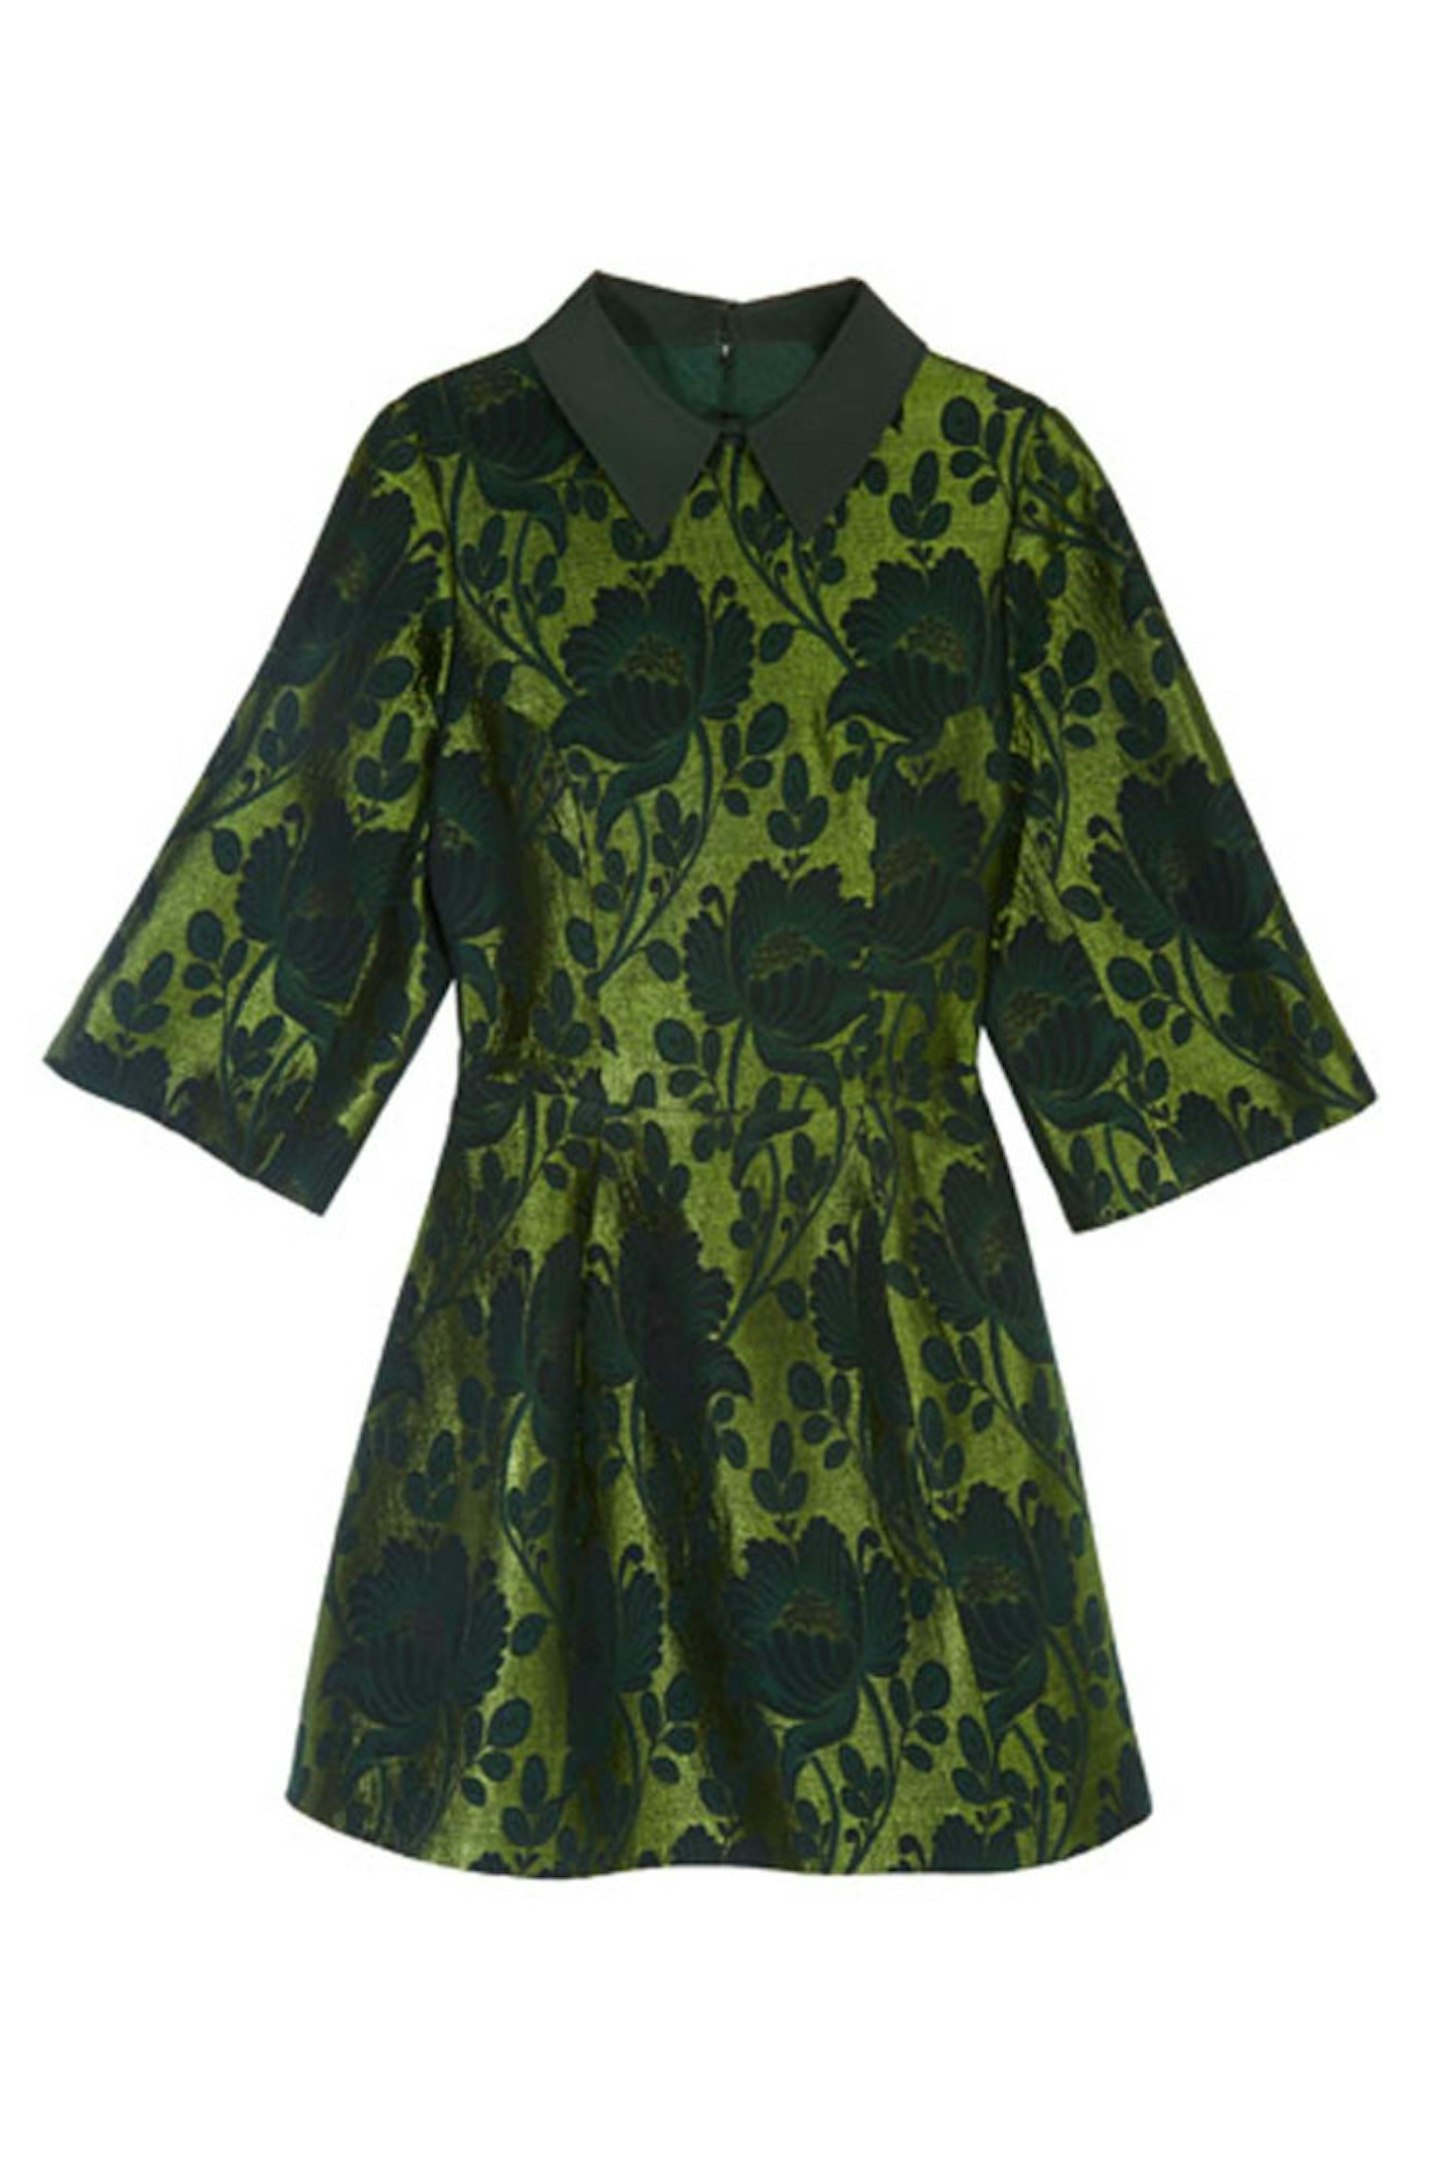 24. Embroidered Green Dress, £86, ASOS.com